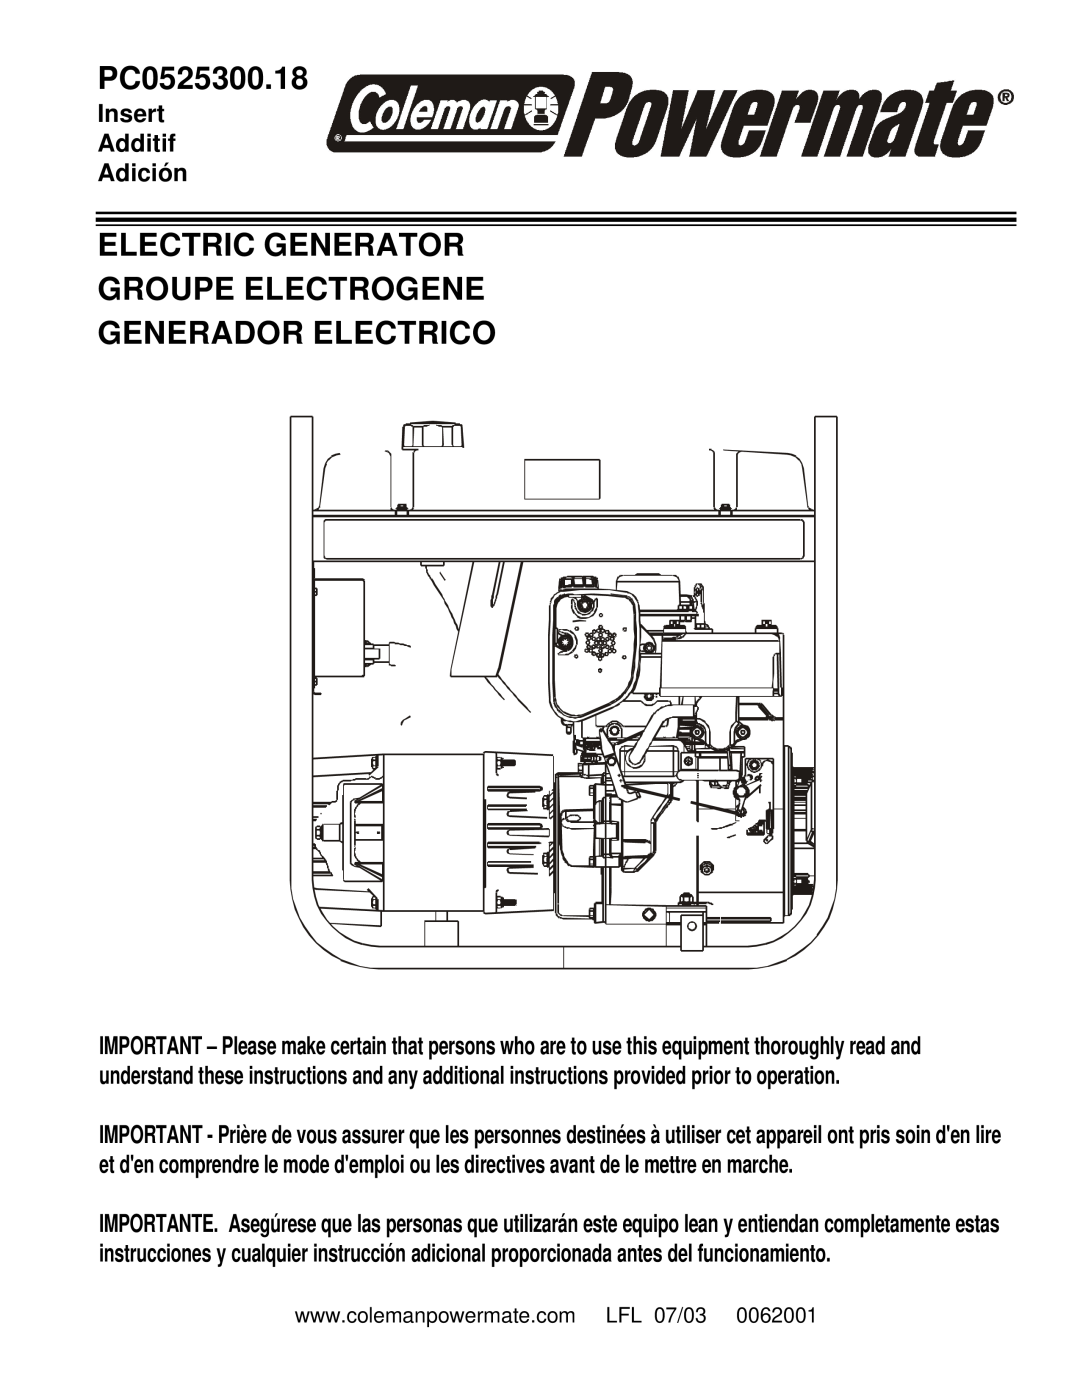 Powermate PC0525300.18 manual Electric Generator Groupe Electrogene, Generador Electrico, Insert Additif Adición 